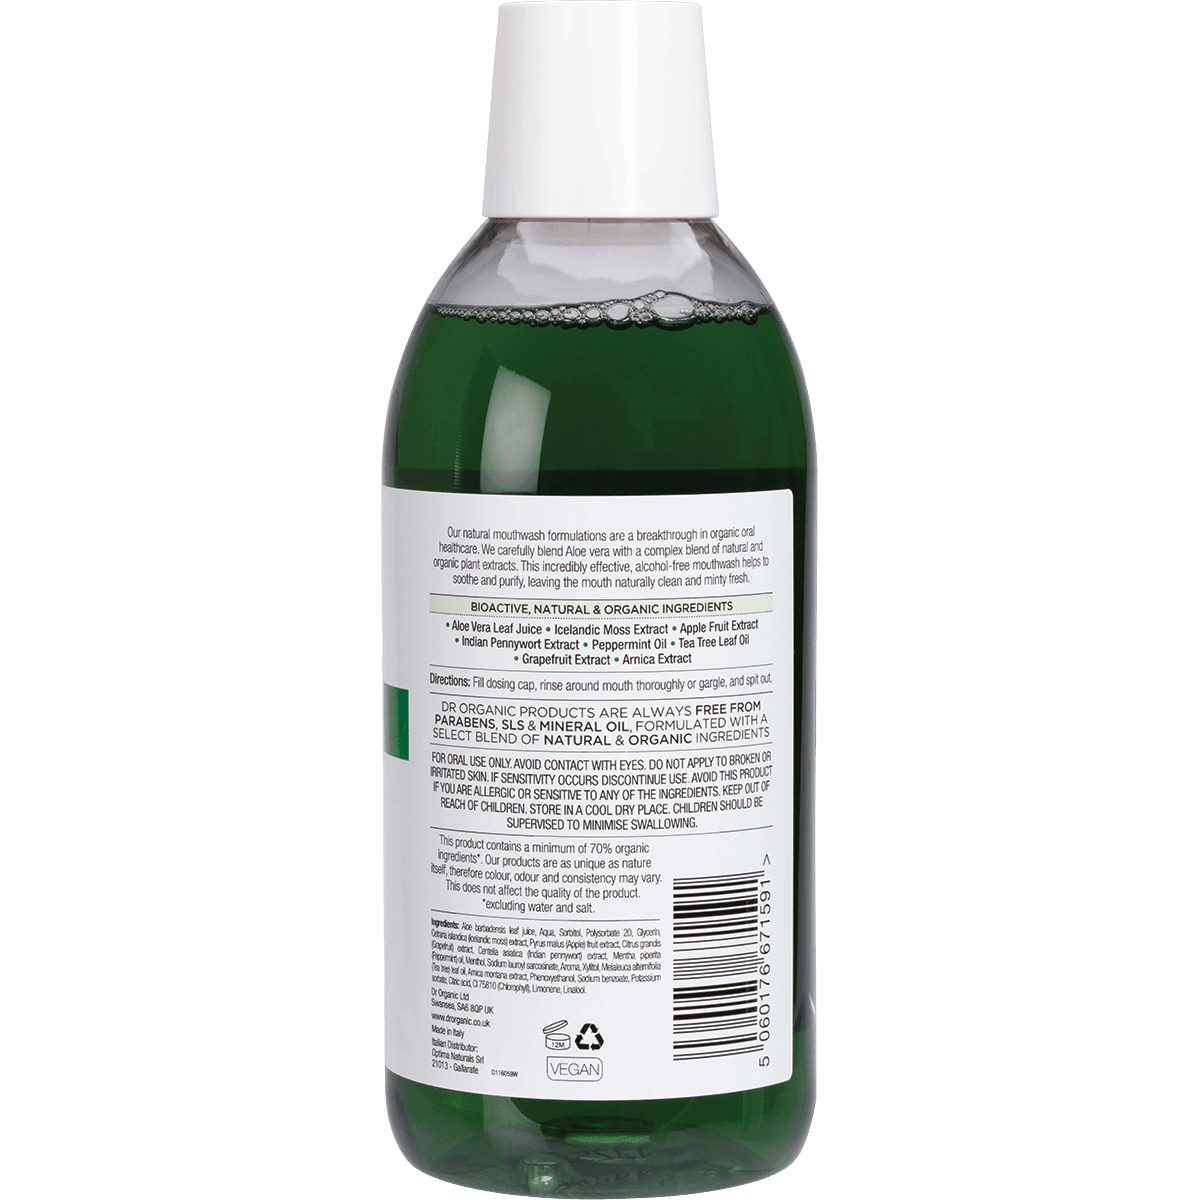 Dr Organic Aloe Vera Mouthwash 500ml - QVM Vitamins™